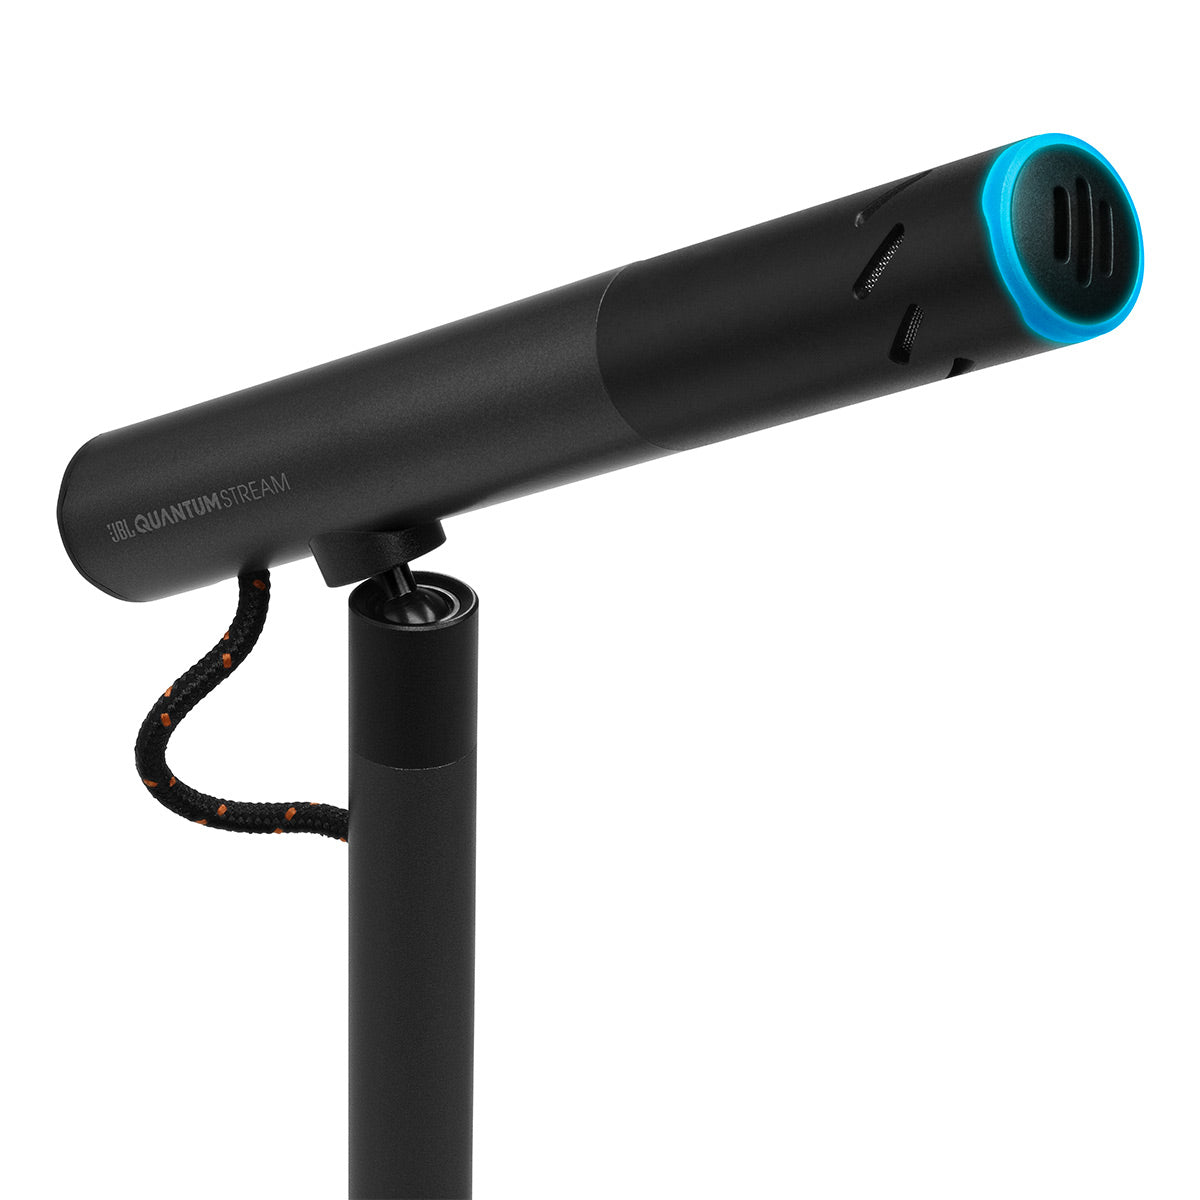 JBL Quantum Stream Talk USB Condenser Microphone for Streaming, Recording, & Gaming